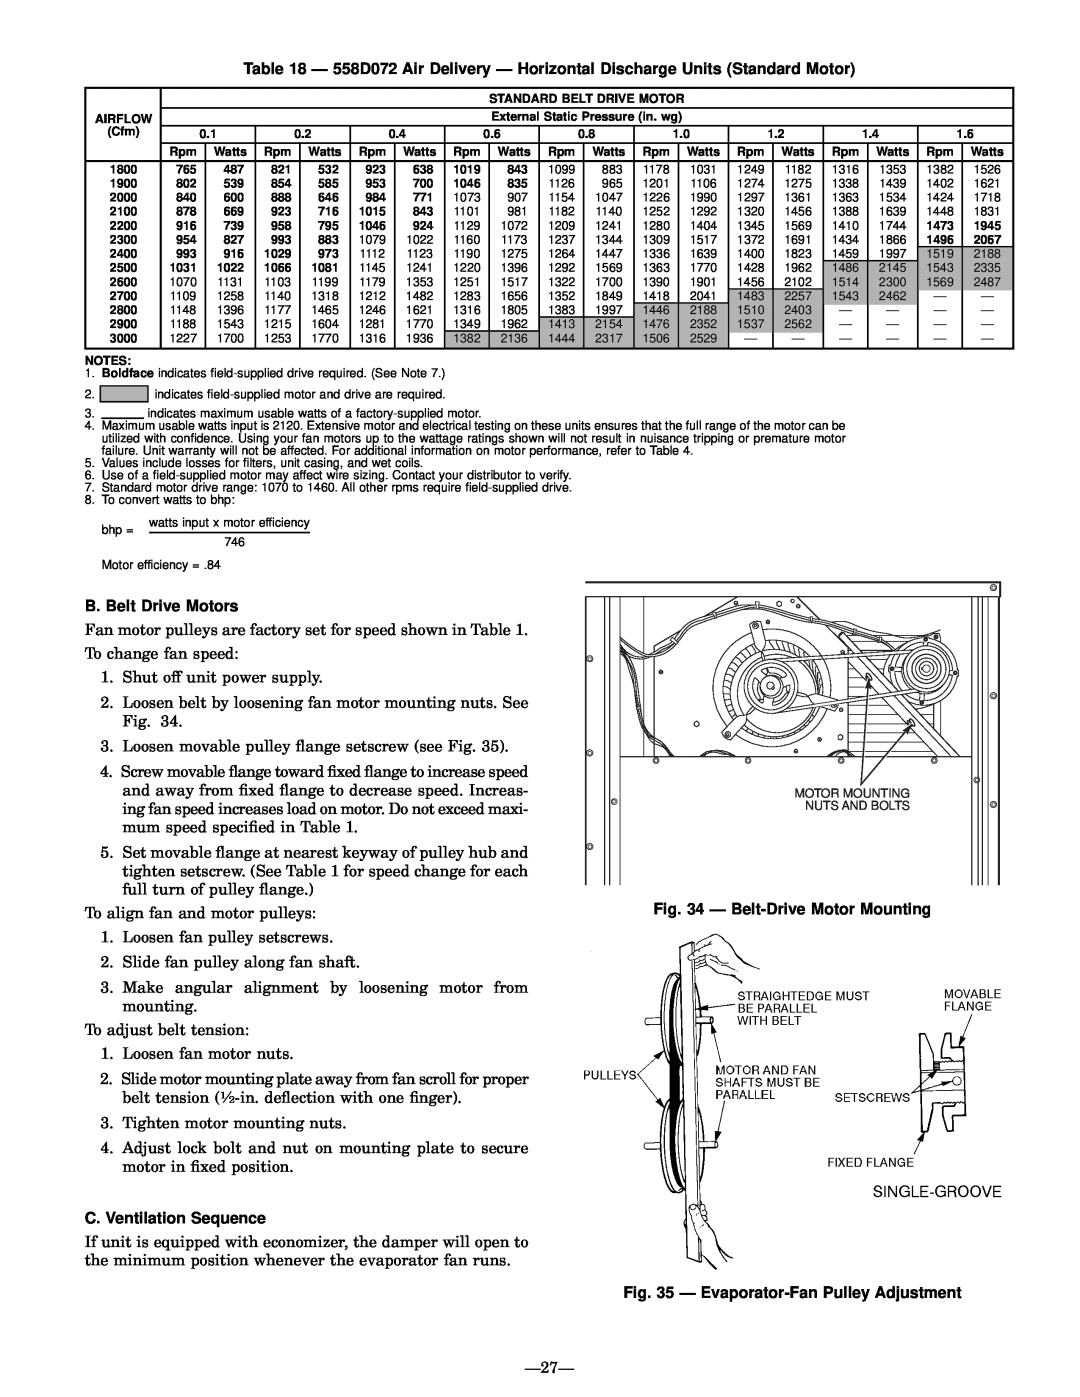 Bryant 558D B. Belt Drive Motors, C.Ventilation Sequence, Ð Belt-DriveMotor Mounting, Ð Evaporator-FanPulley Adjustment 